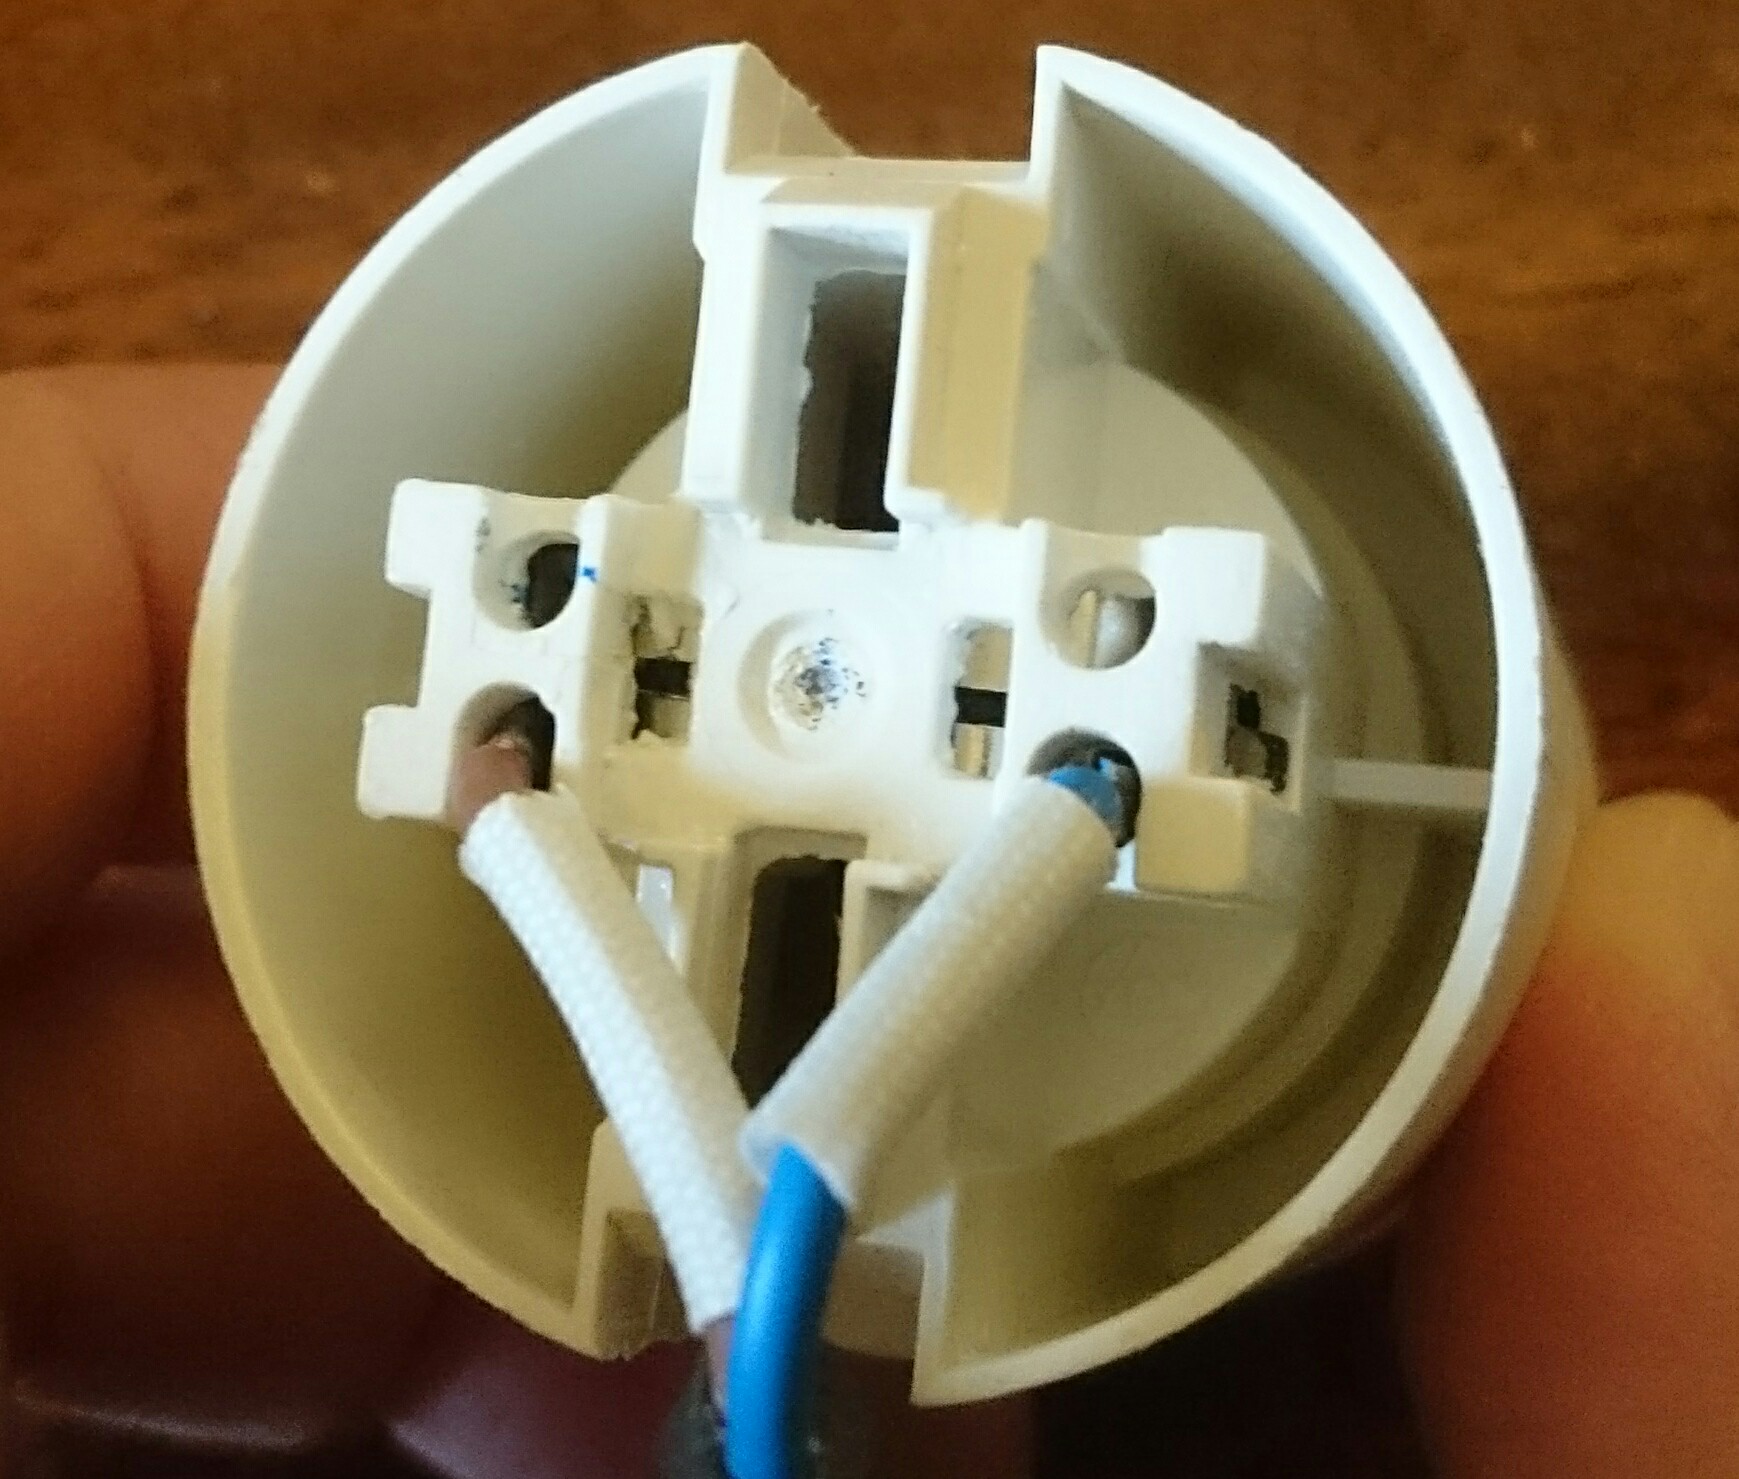 Rewiring screw fitting lamp holder | DIYnot Forums